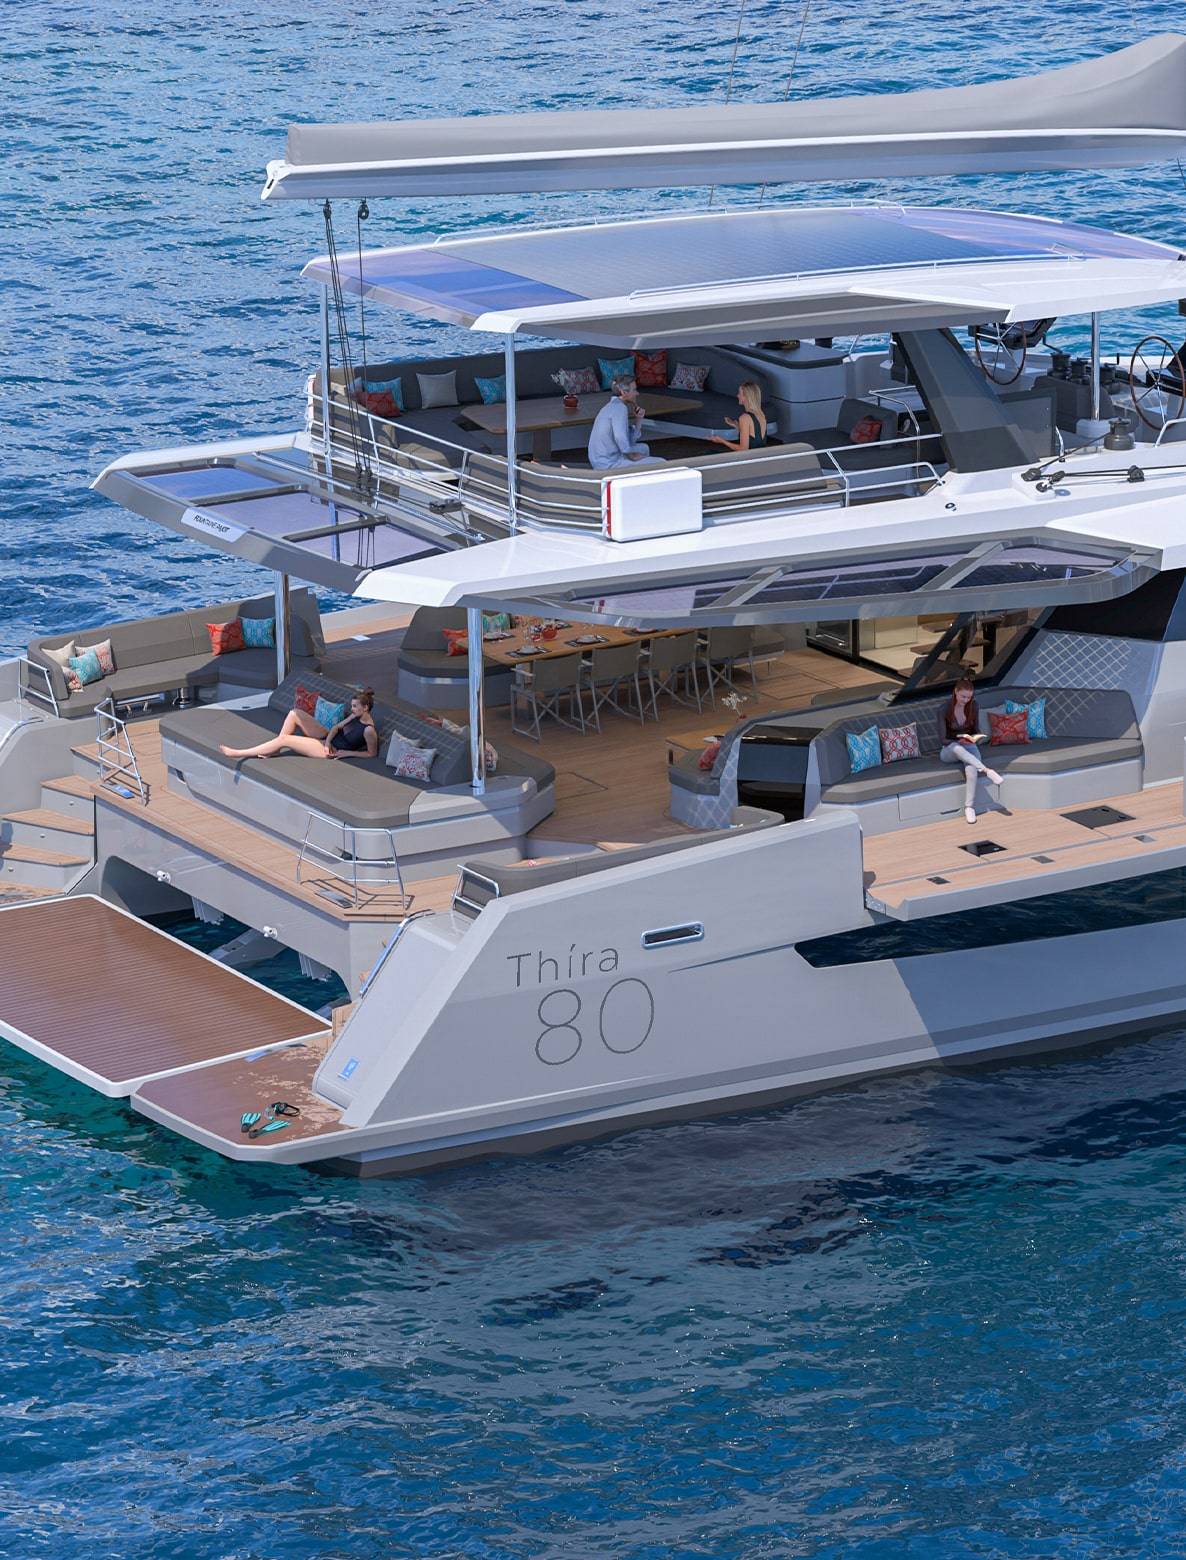 Thira-80-Fountaine-Pajot-Sailing-Catamaran-luxury-super-yacht-catamaran-aft-cockpit